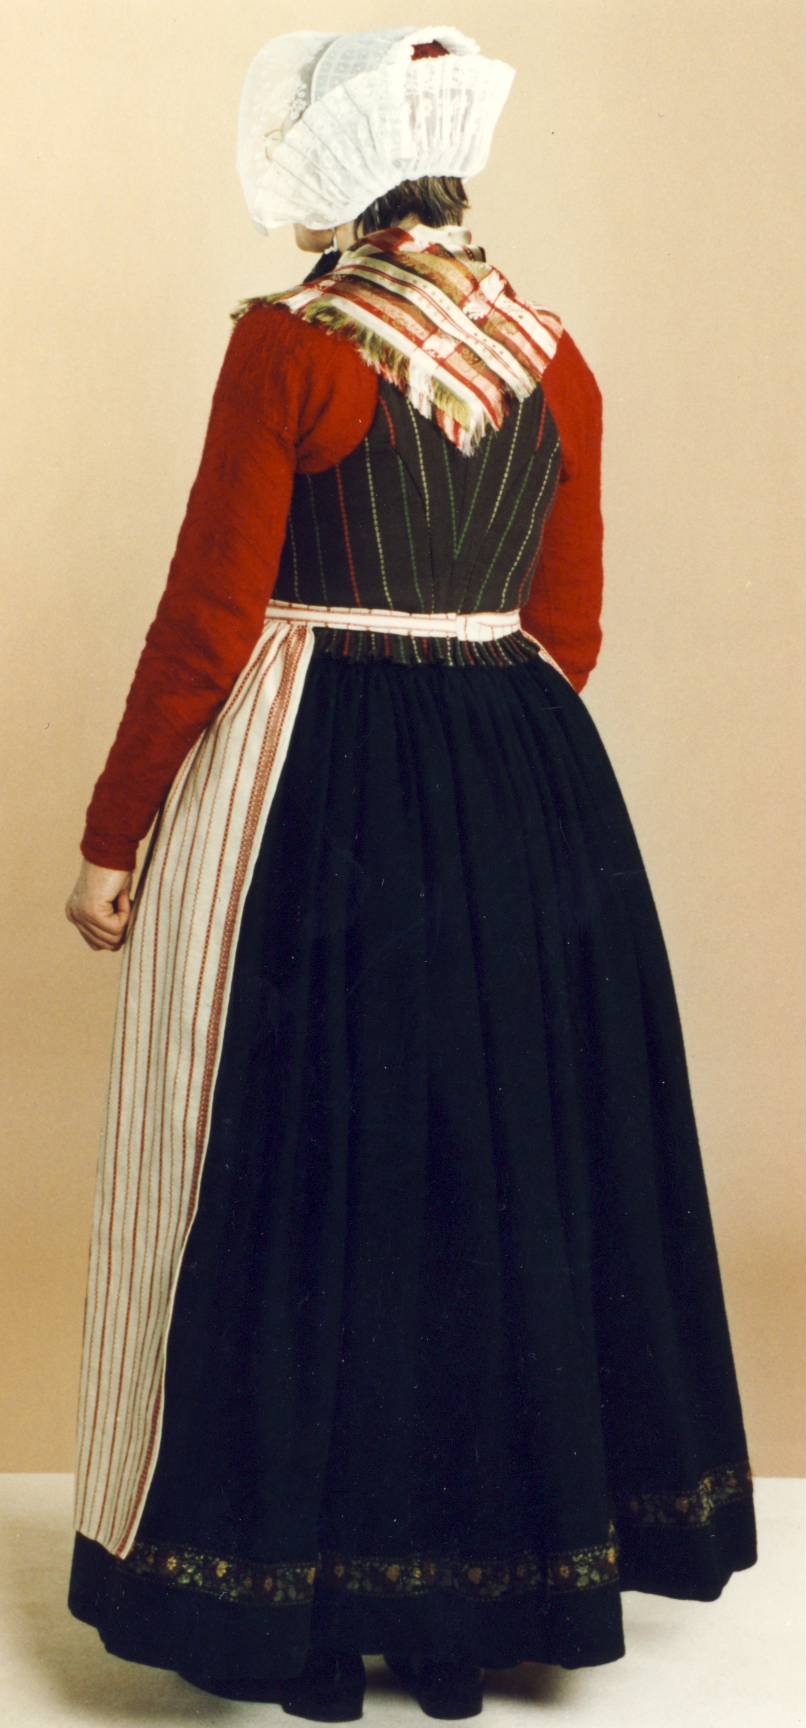 Ostjylland | Victorian dress, Danish culture, Clothes